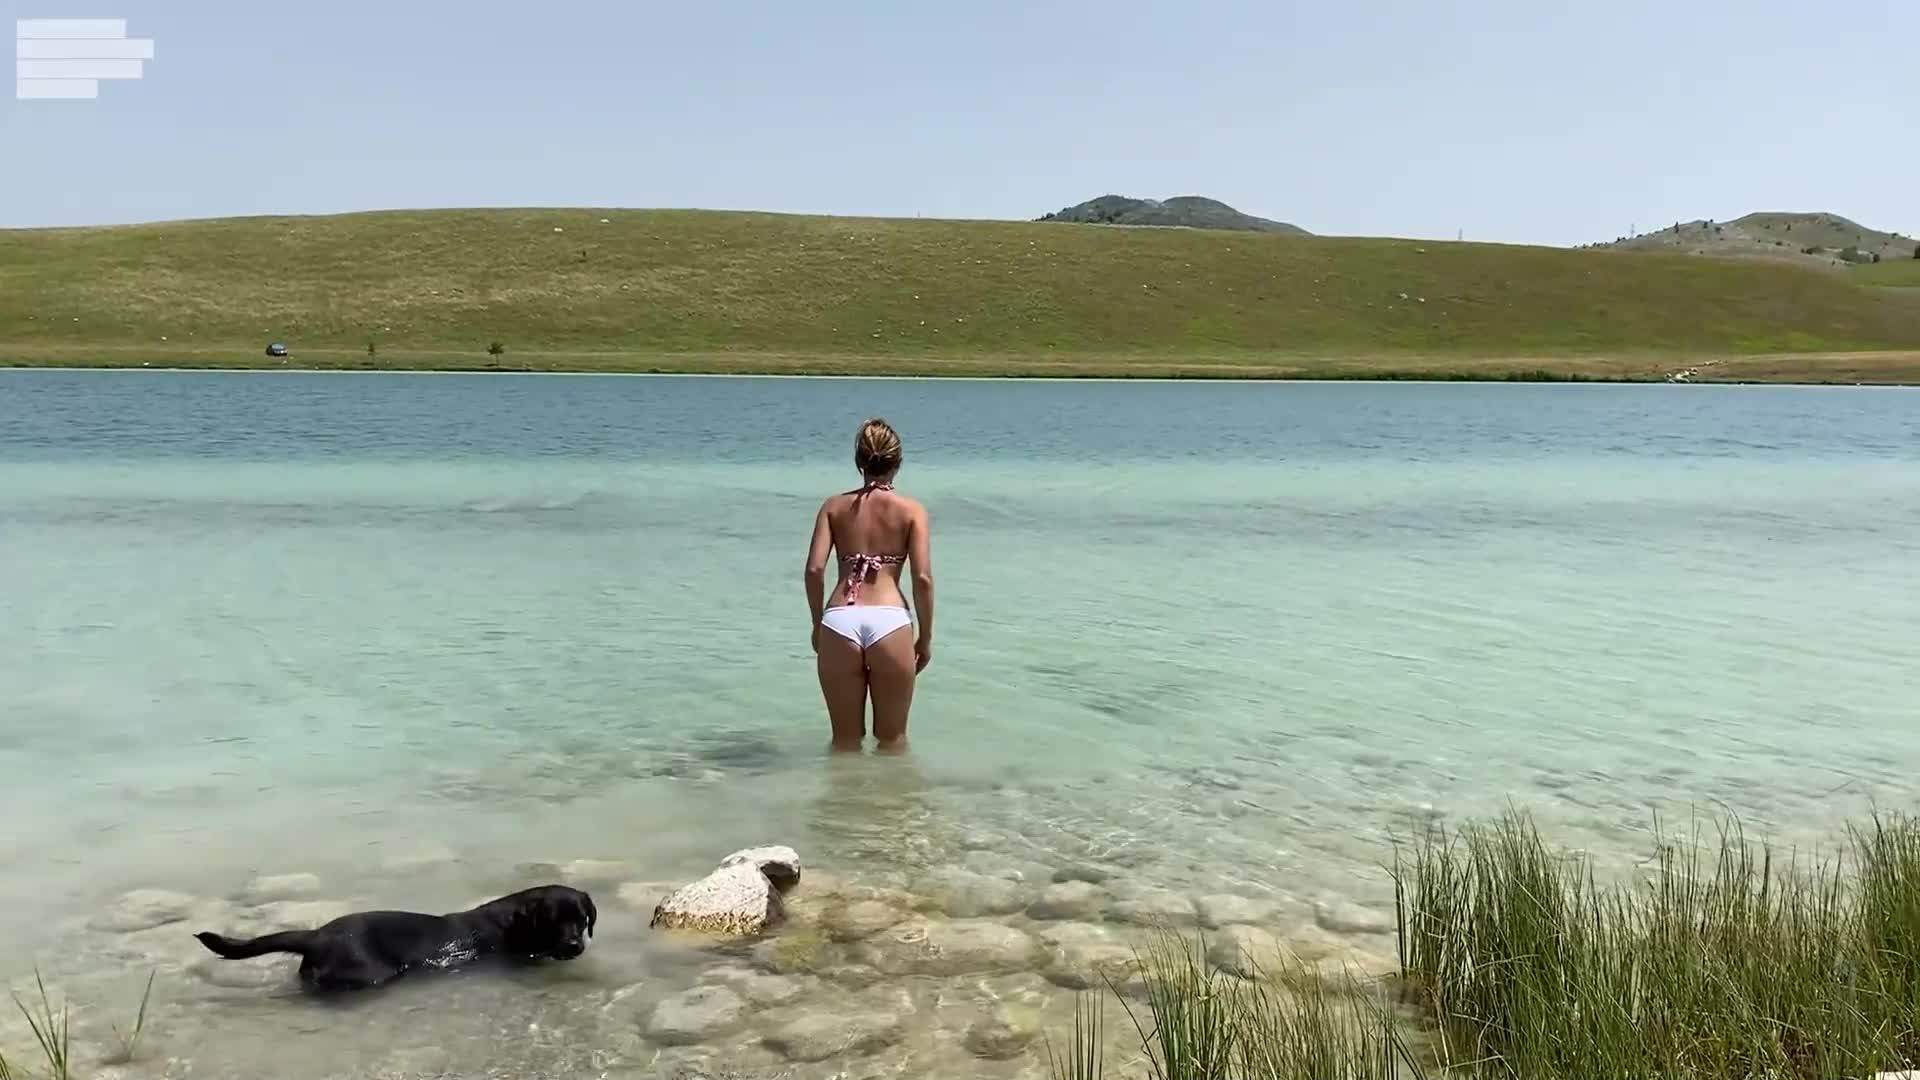  kupanje na vrazjem jezeru 